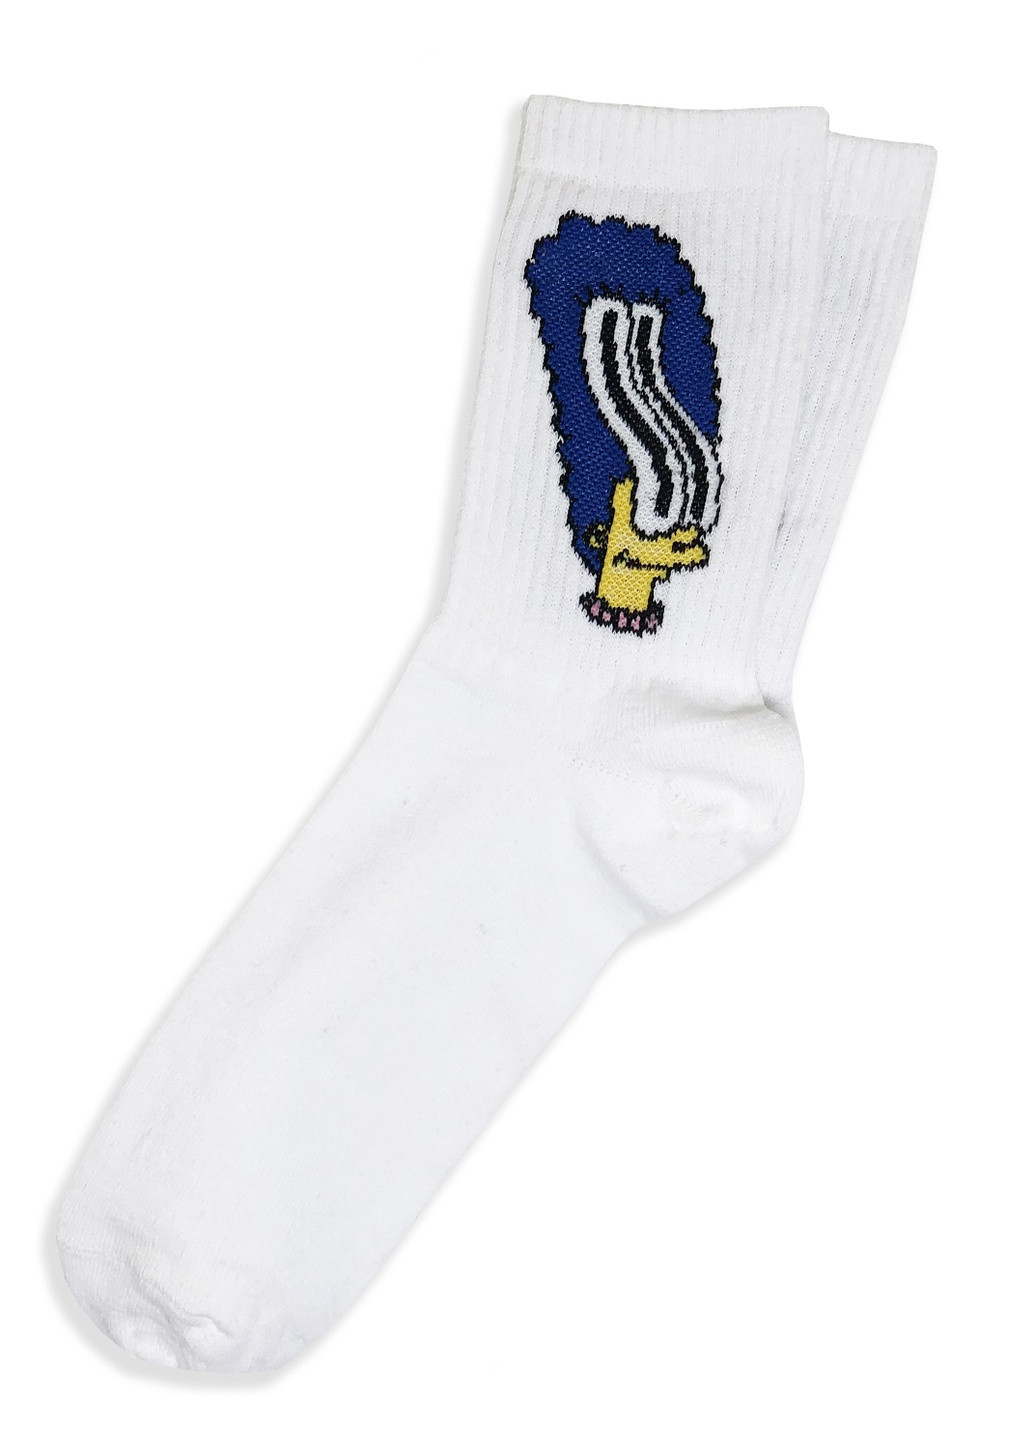 Носки Симпсоны. Мардж Simpsons Rock'n'socks высокие (211926017)